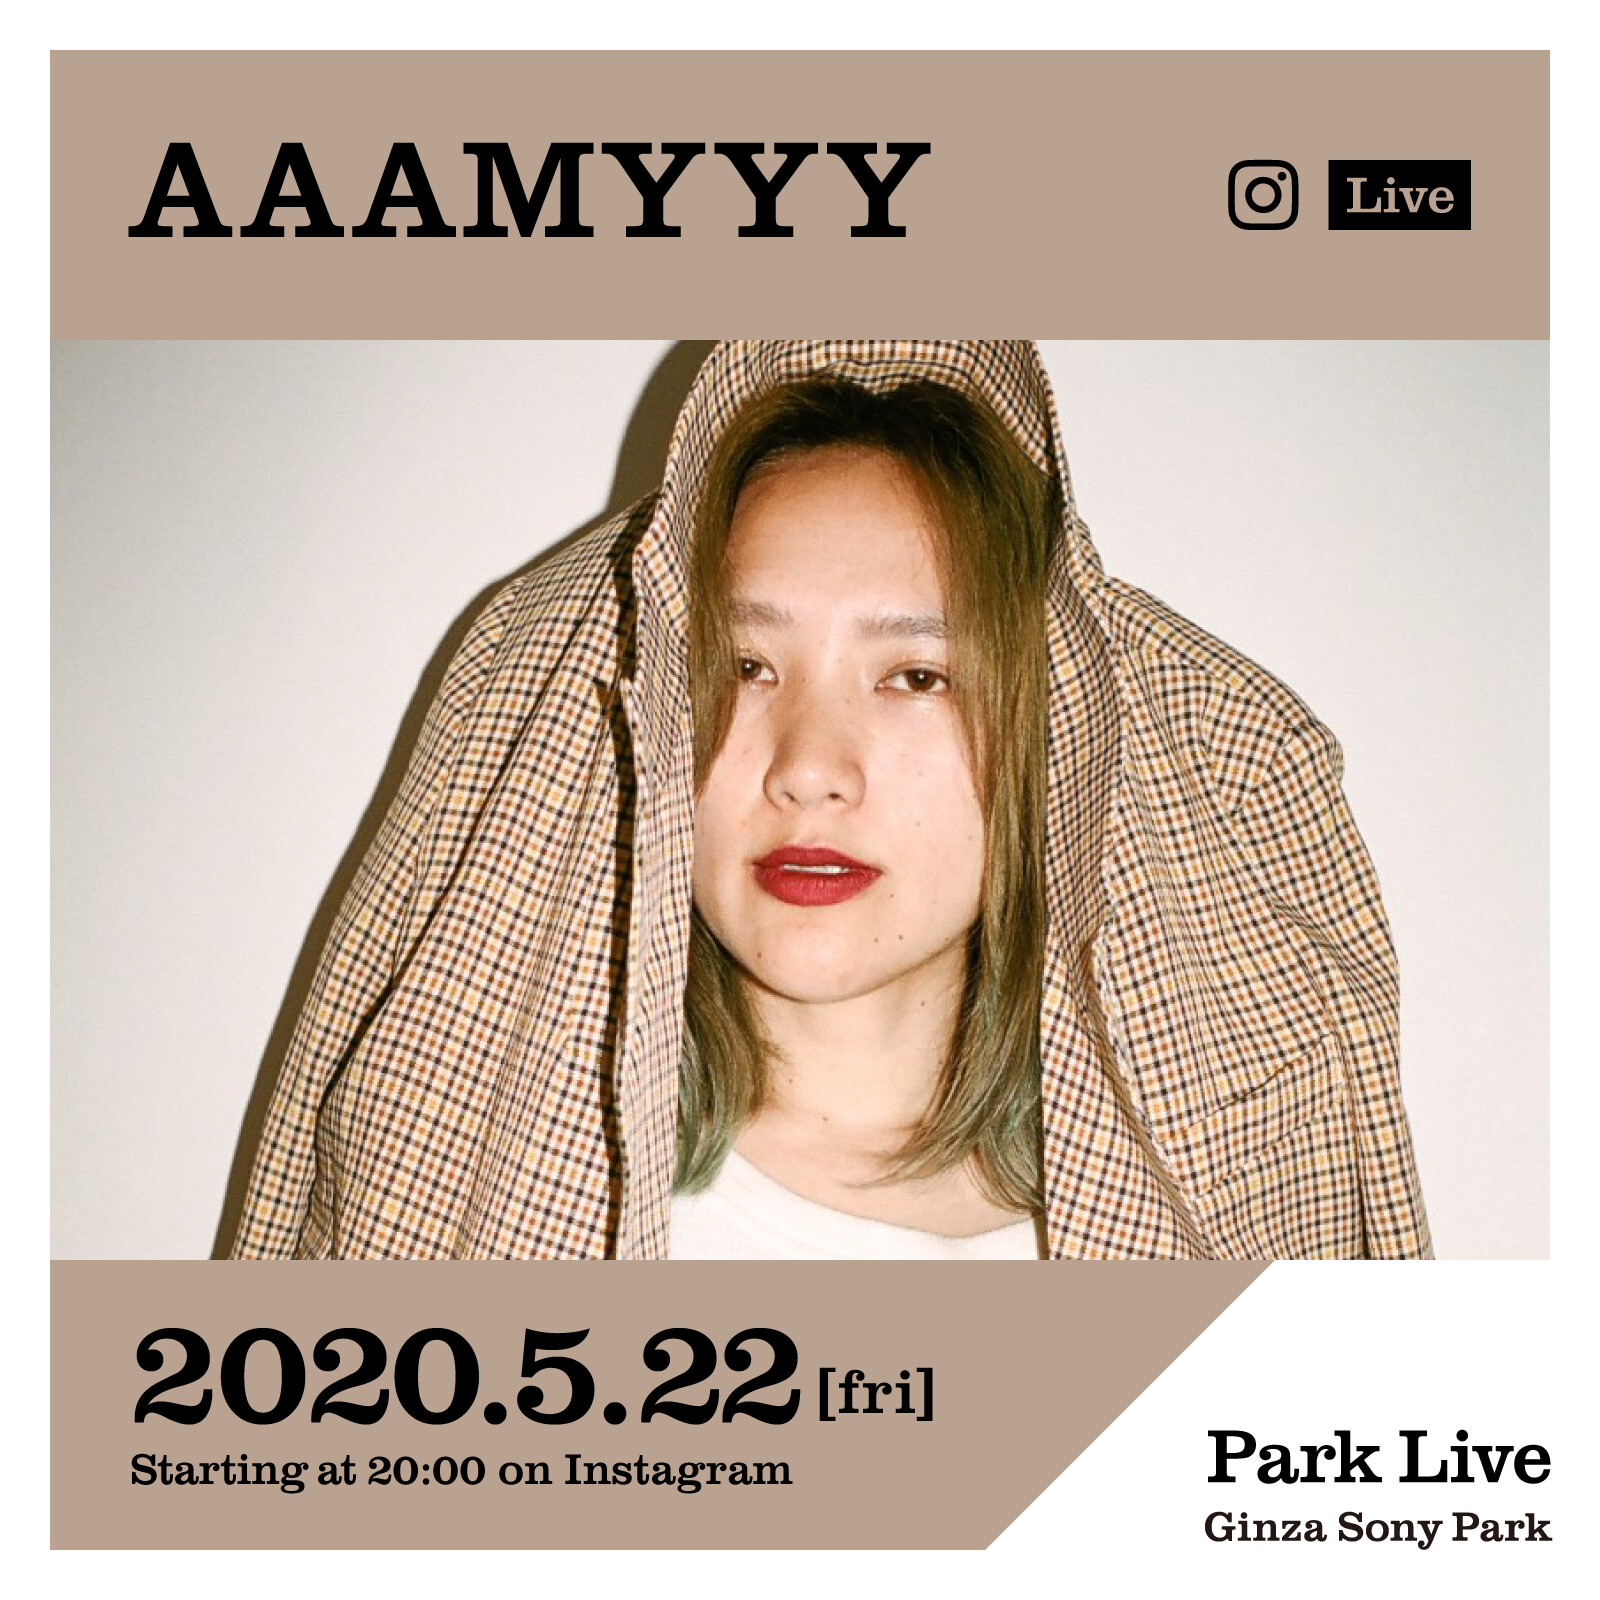 Aaamyyy Tampalay Ginza Sony Parkが開催するpark Live インスタ